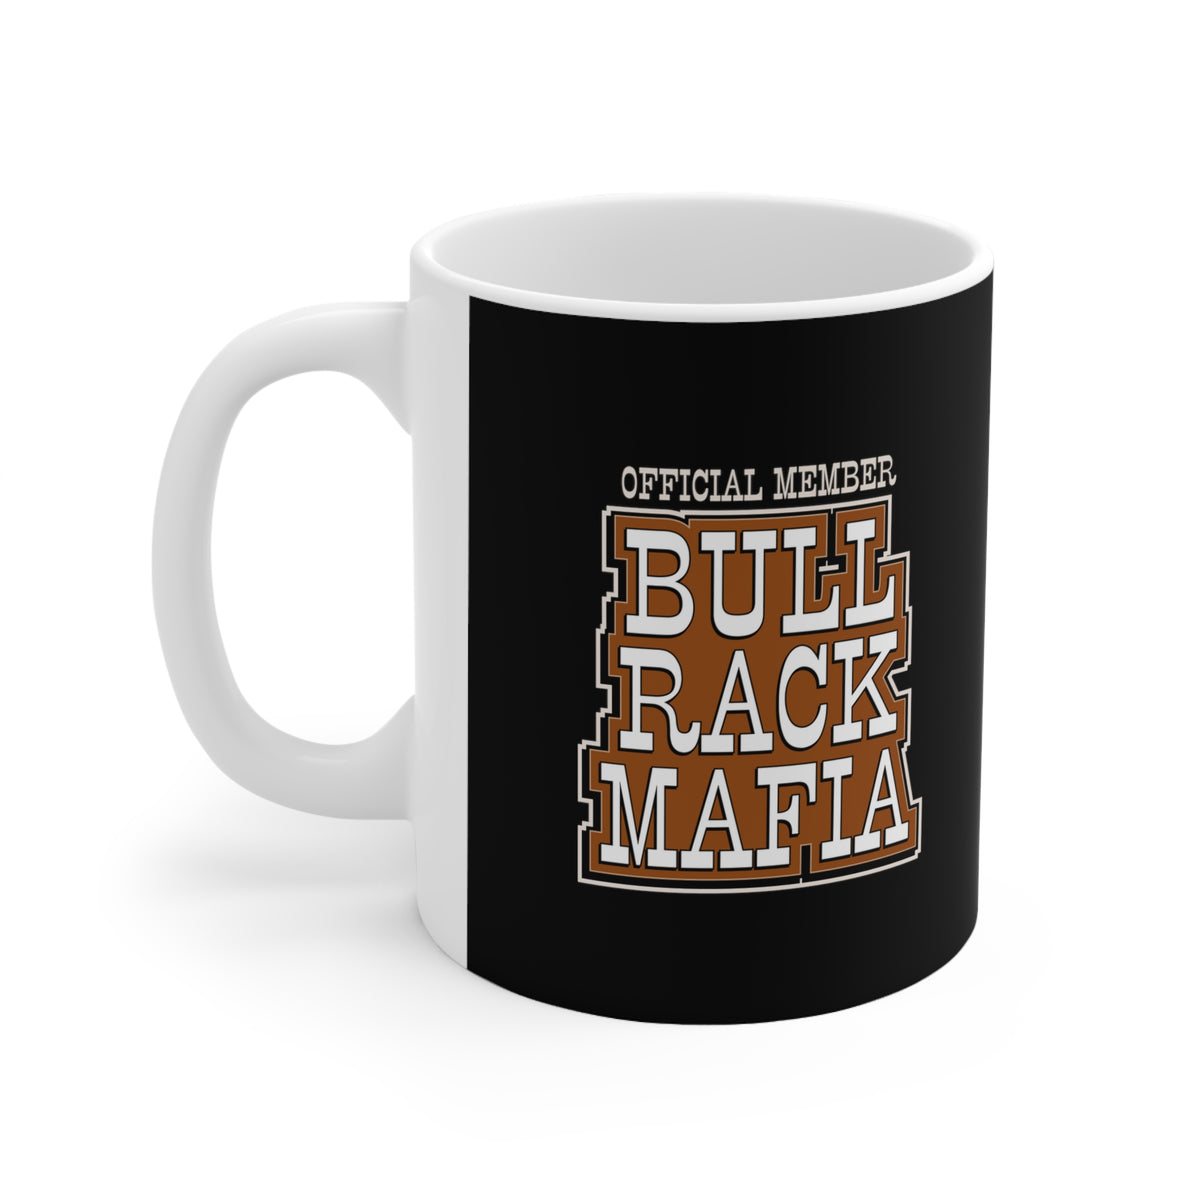 Ain't No Feelin' Like Cowmobilin' - Bull Rack Mafia - Bull Hauler - Ceramic Mug 11oz - Free Shipping